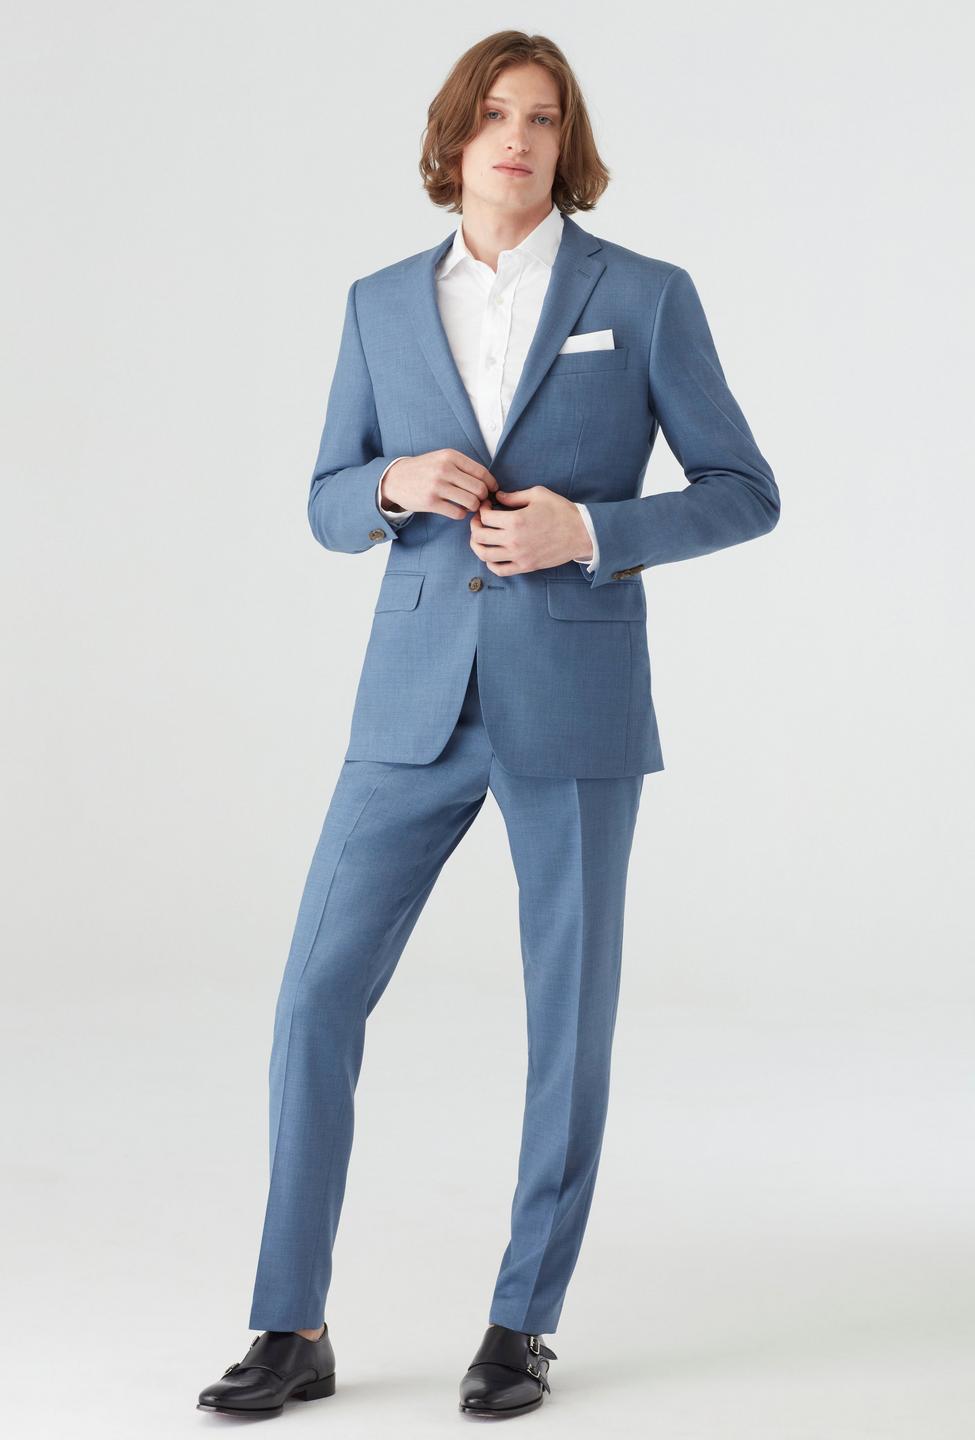 Harrogate Light Blue Suit